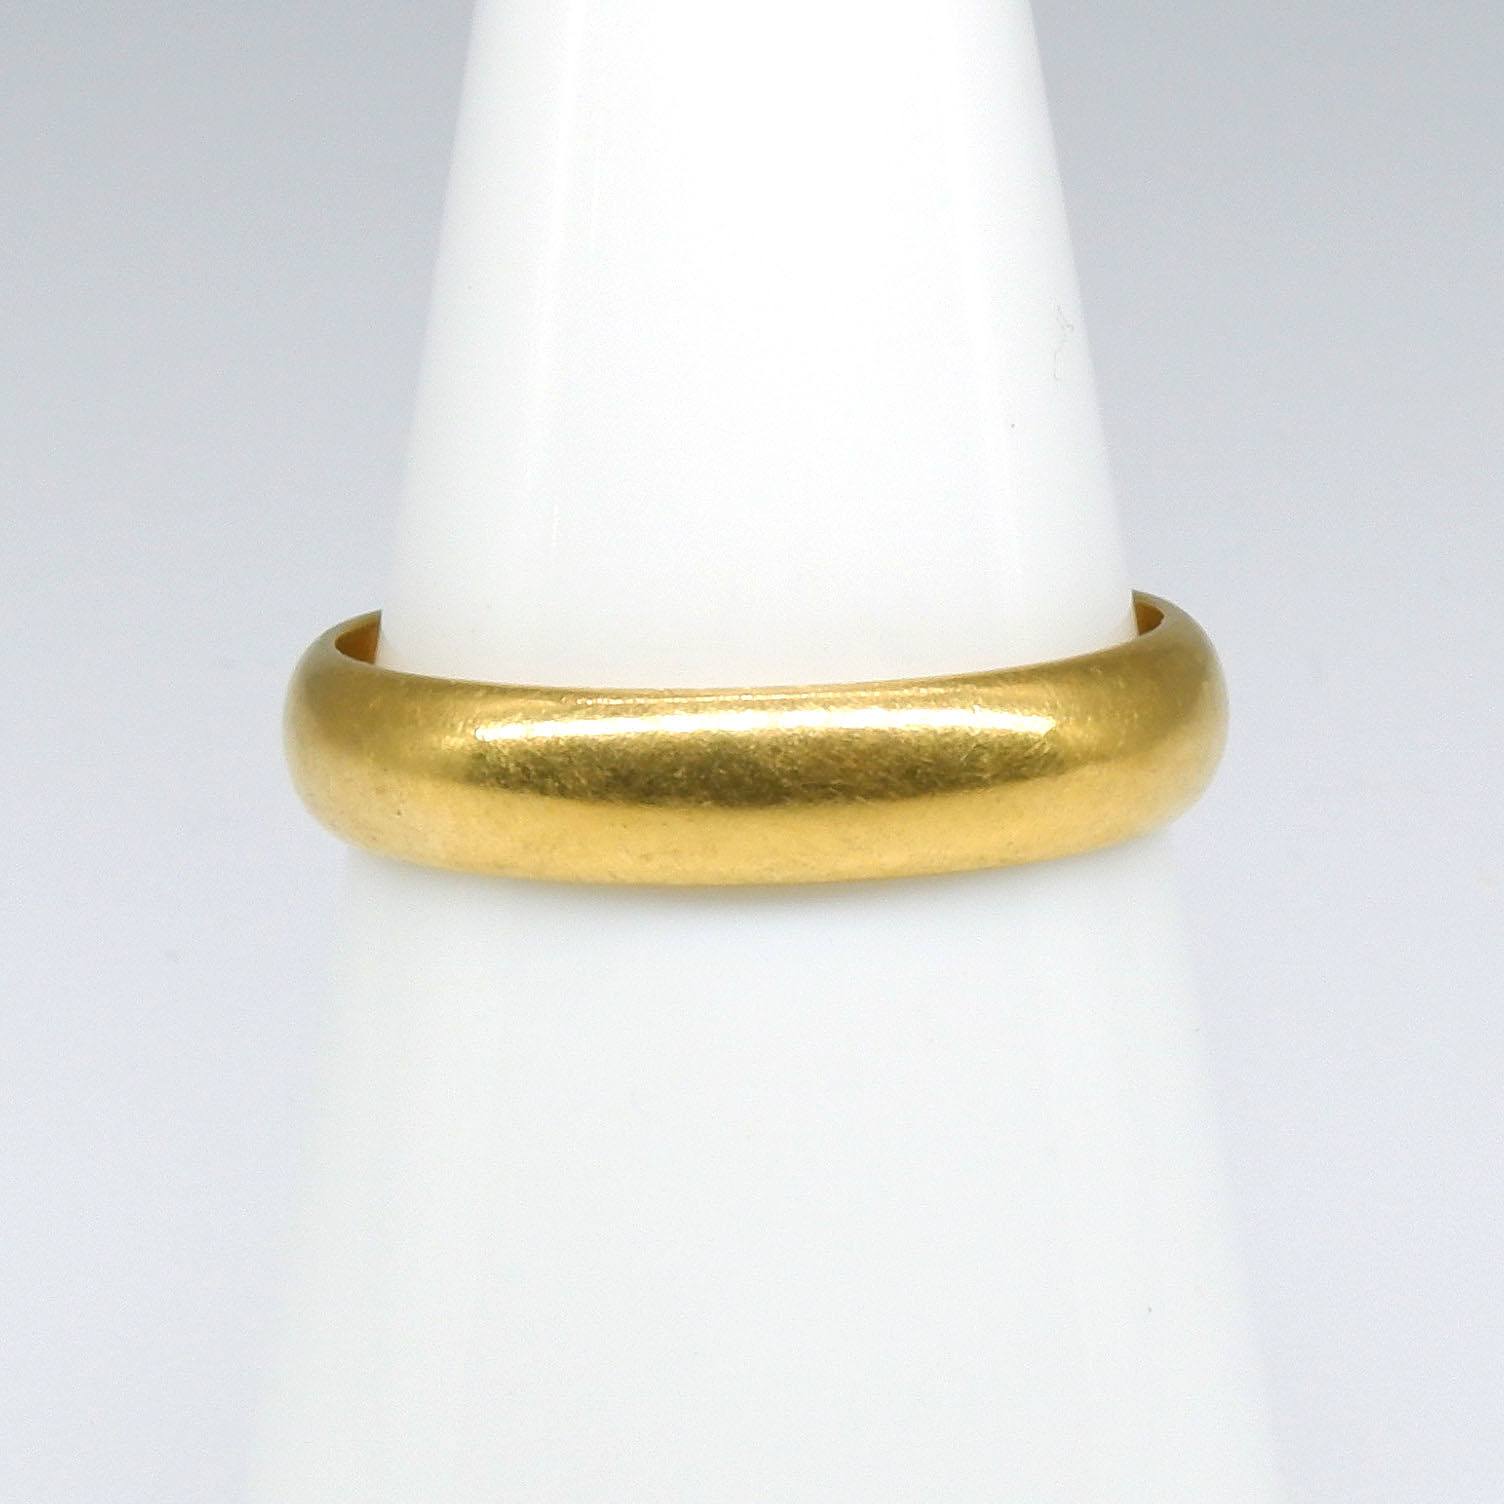 '18ct Yellow Gold Wedding Ring'